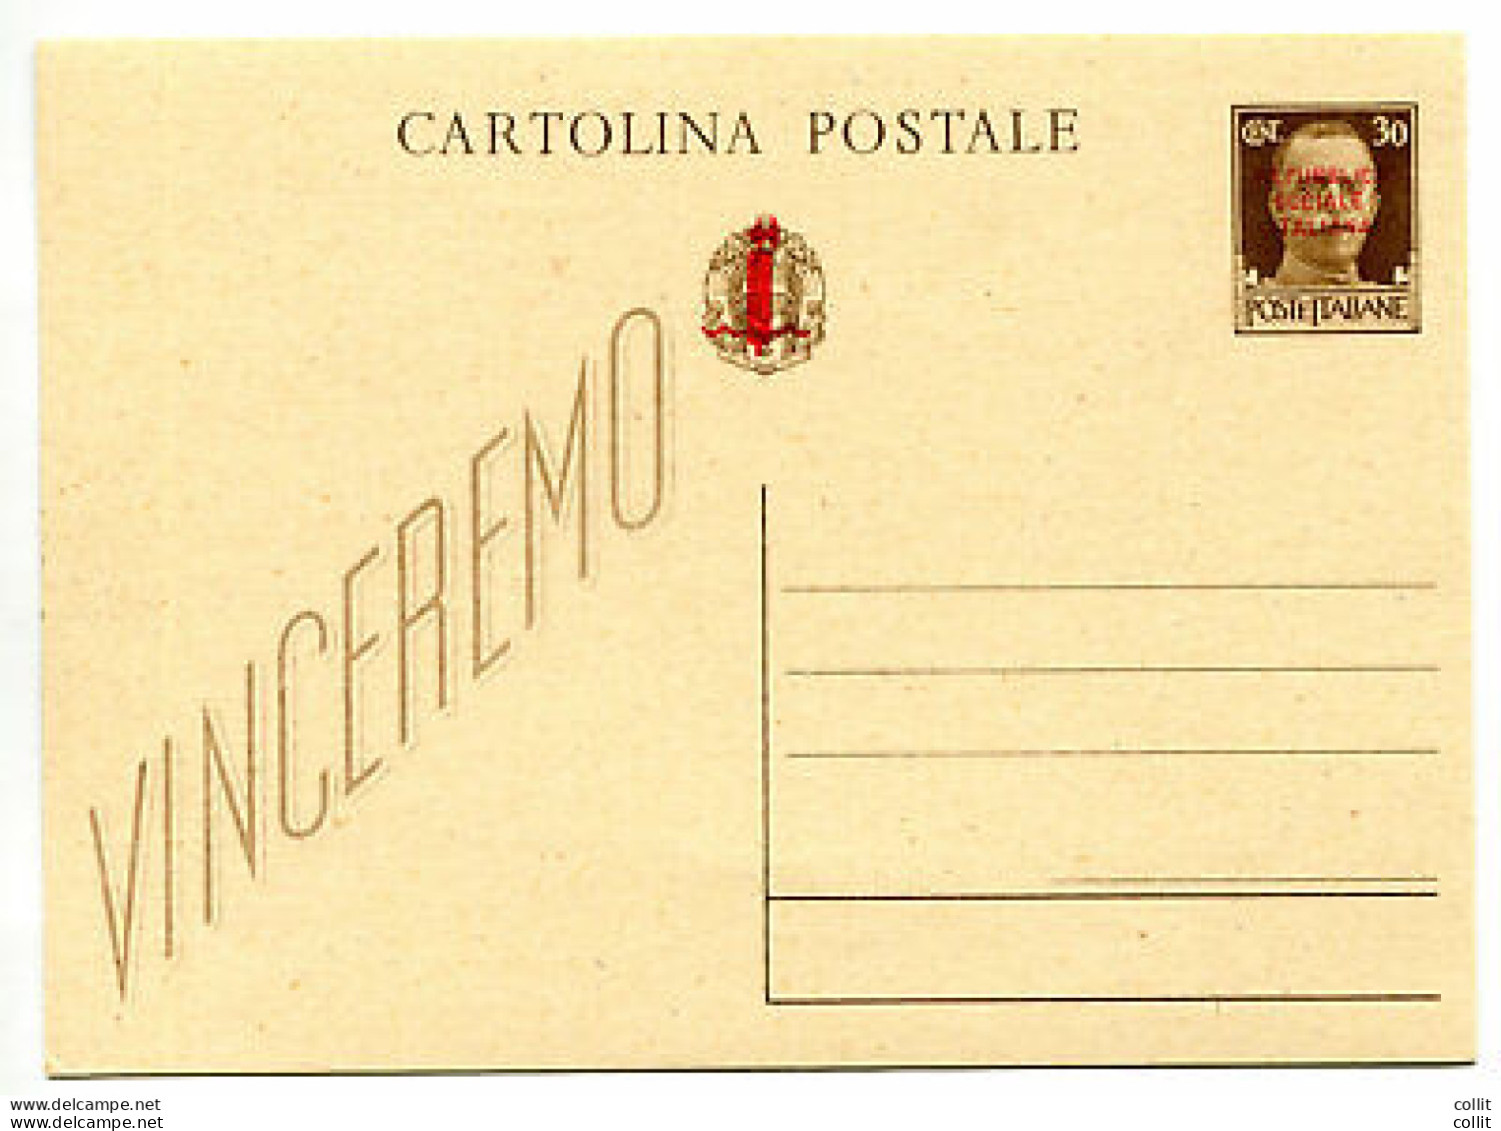 Cartolina Postale Repubblica Sociale Cent. 30 - Mint/hinged